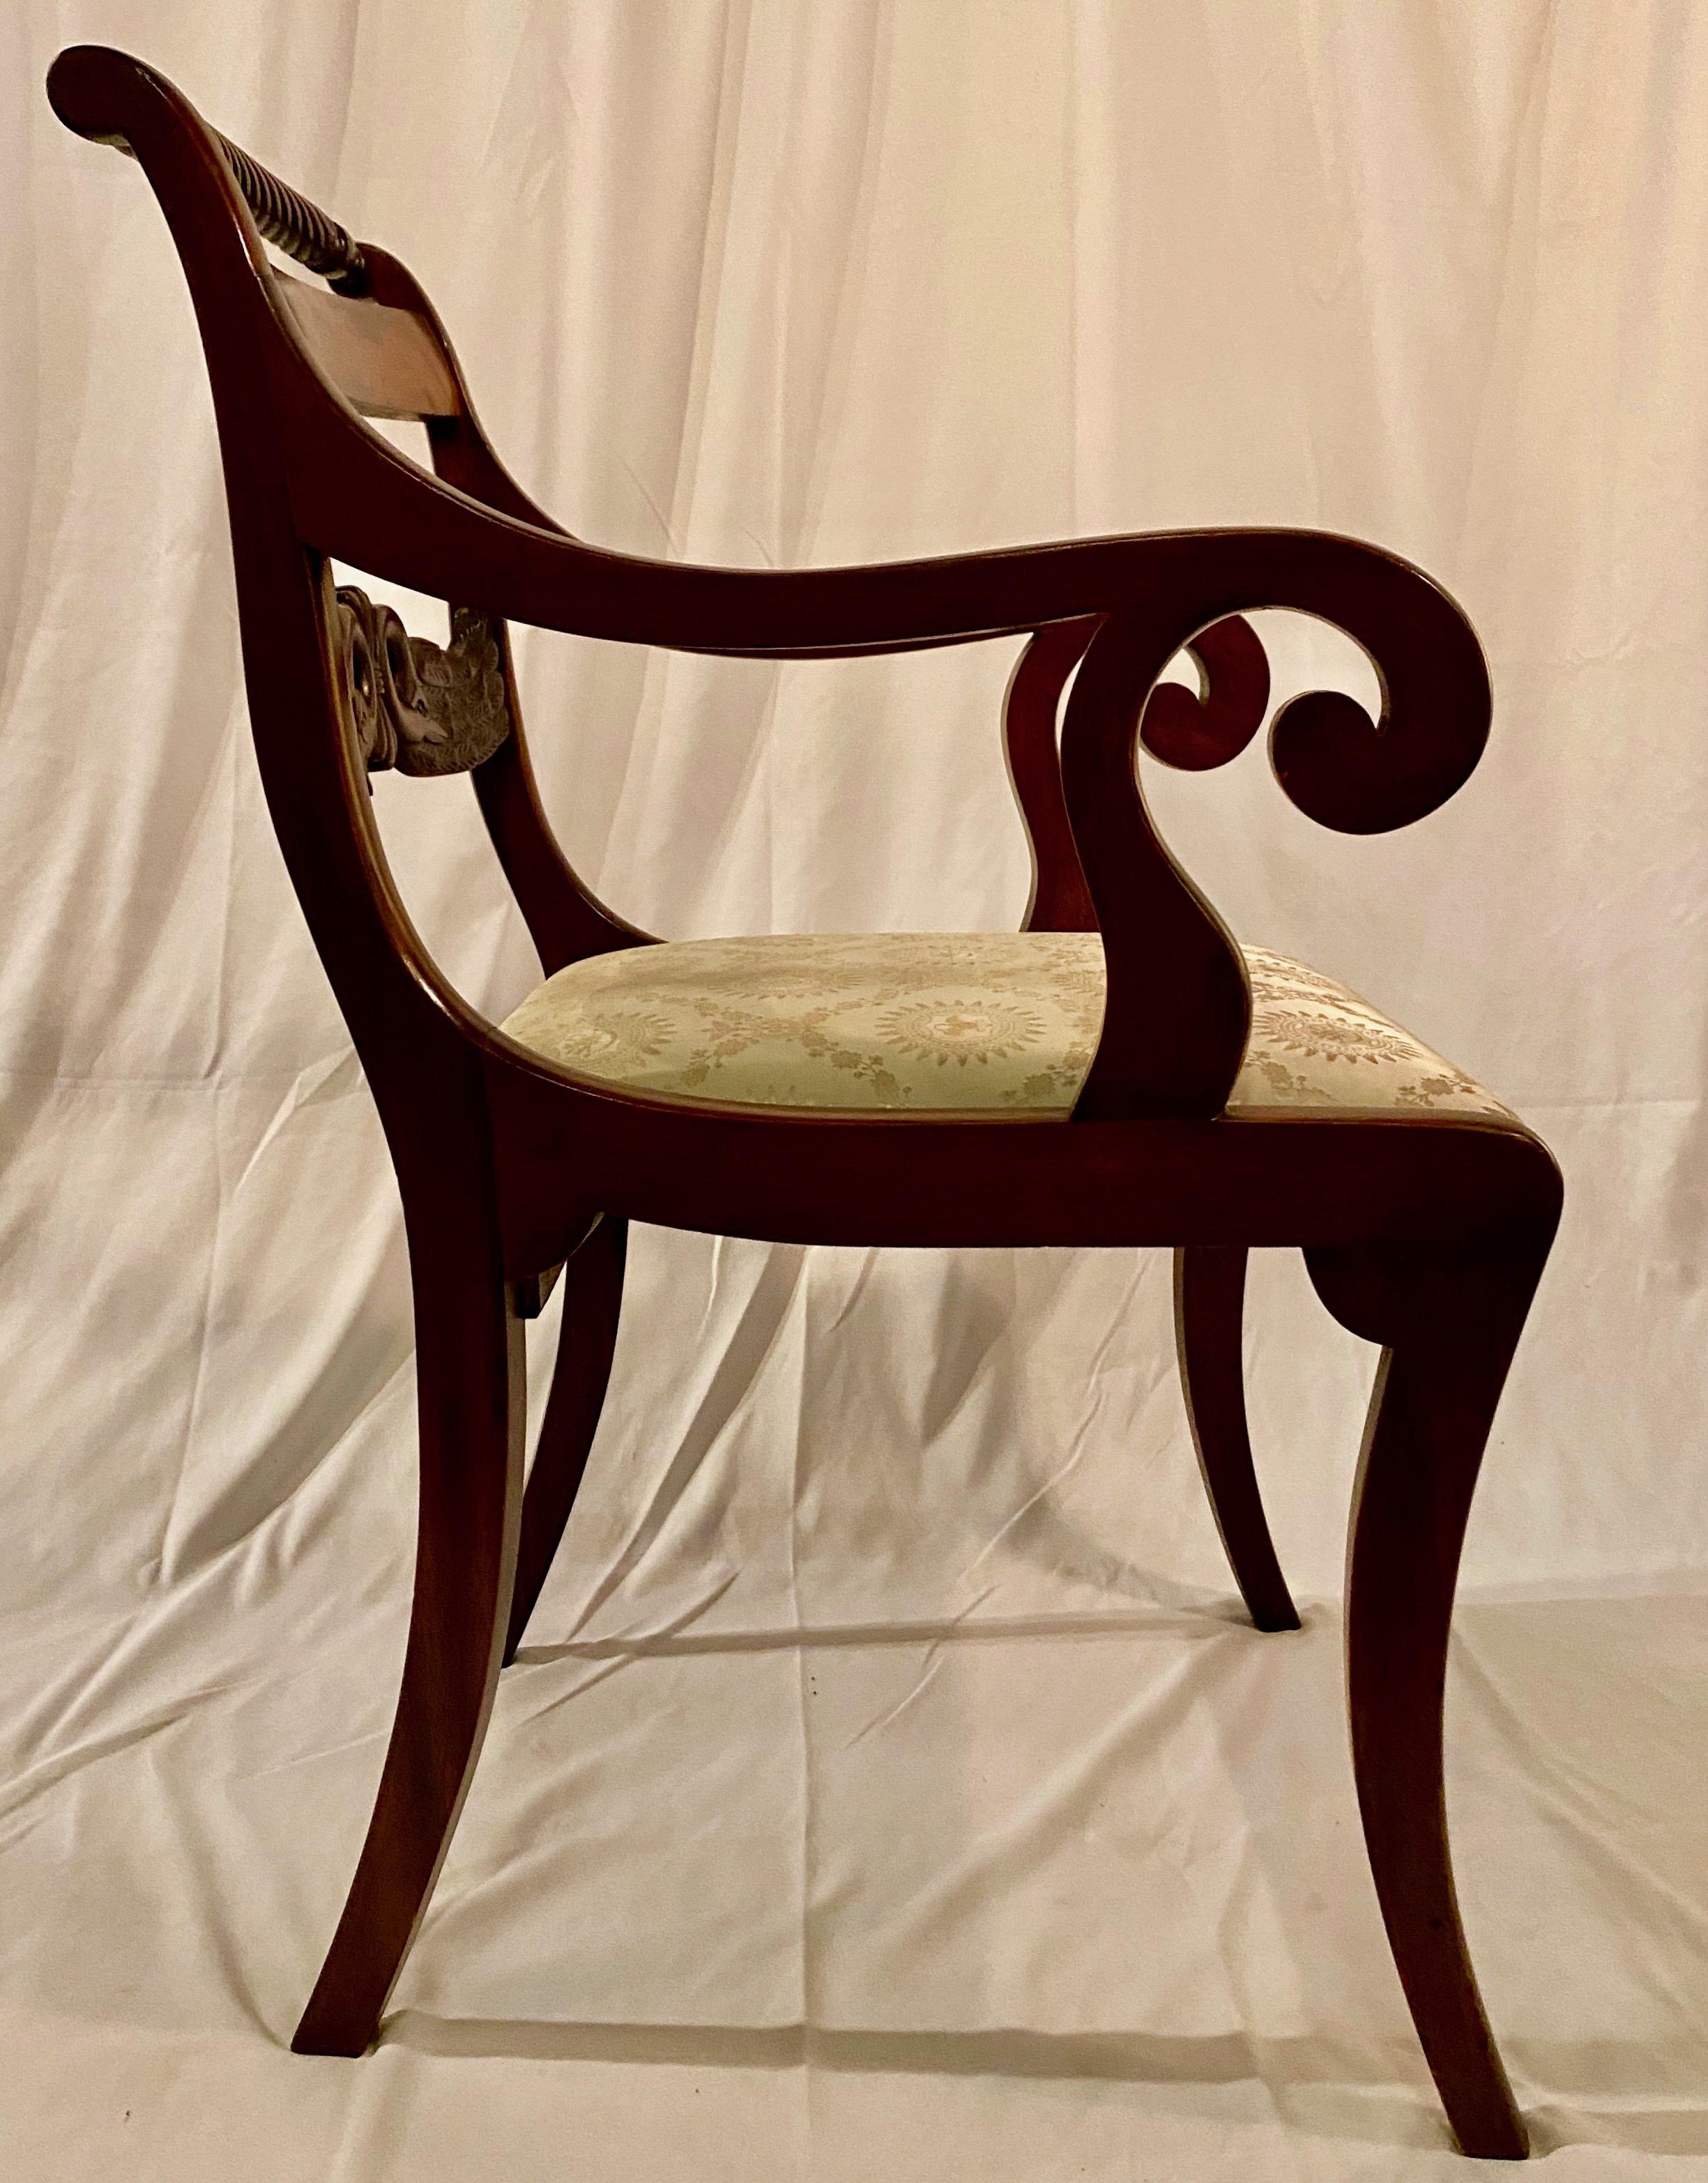 Antique federal design mahogany desk chair, circa 1890
EAC026.